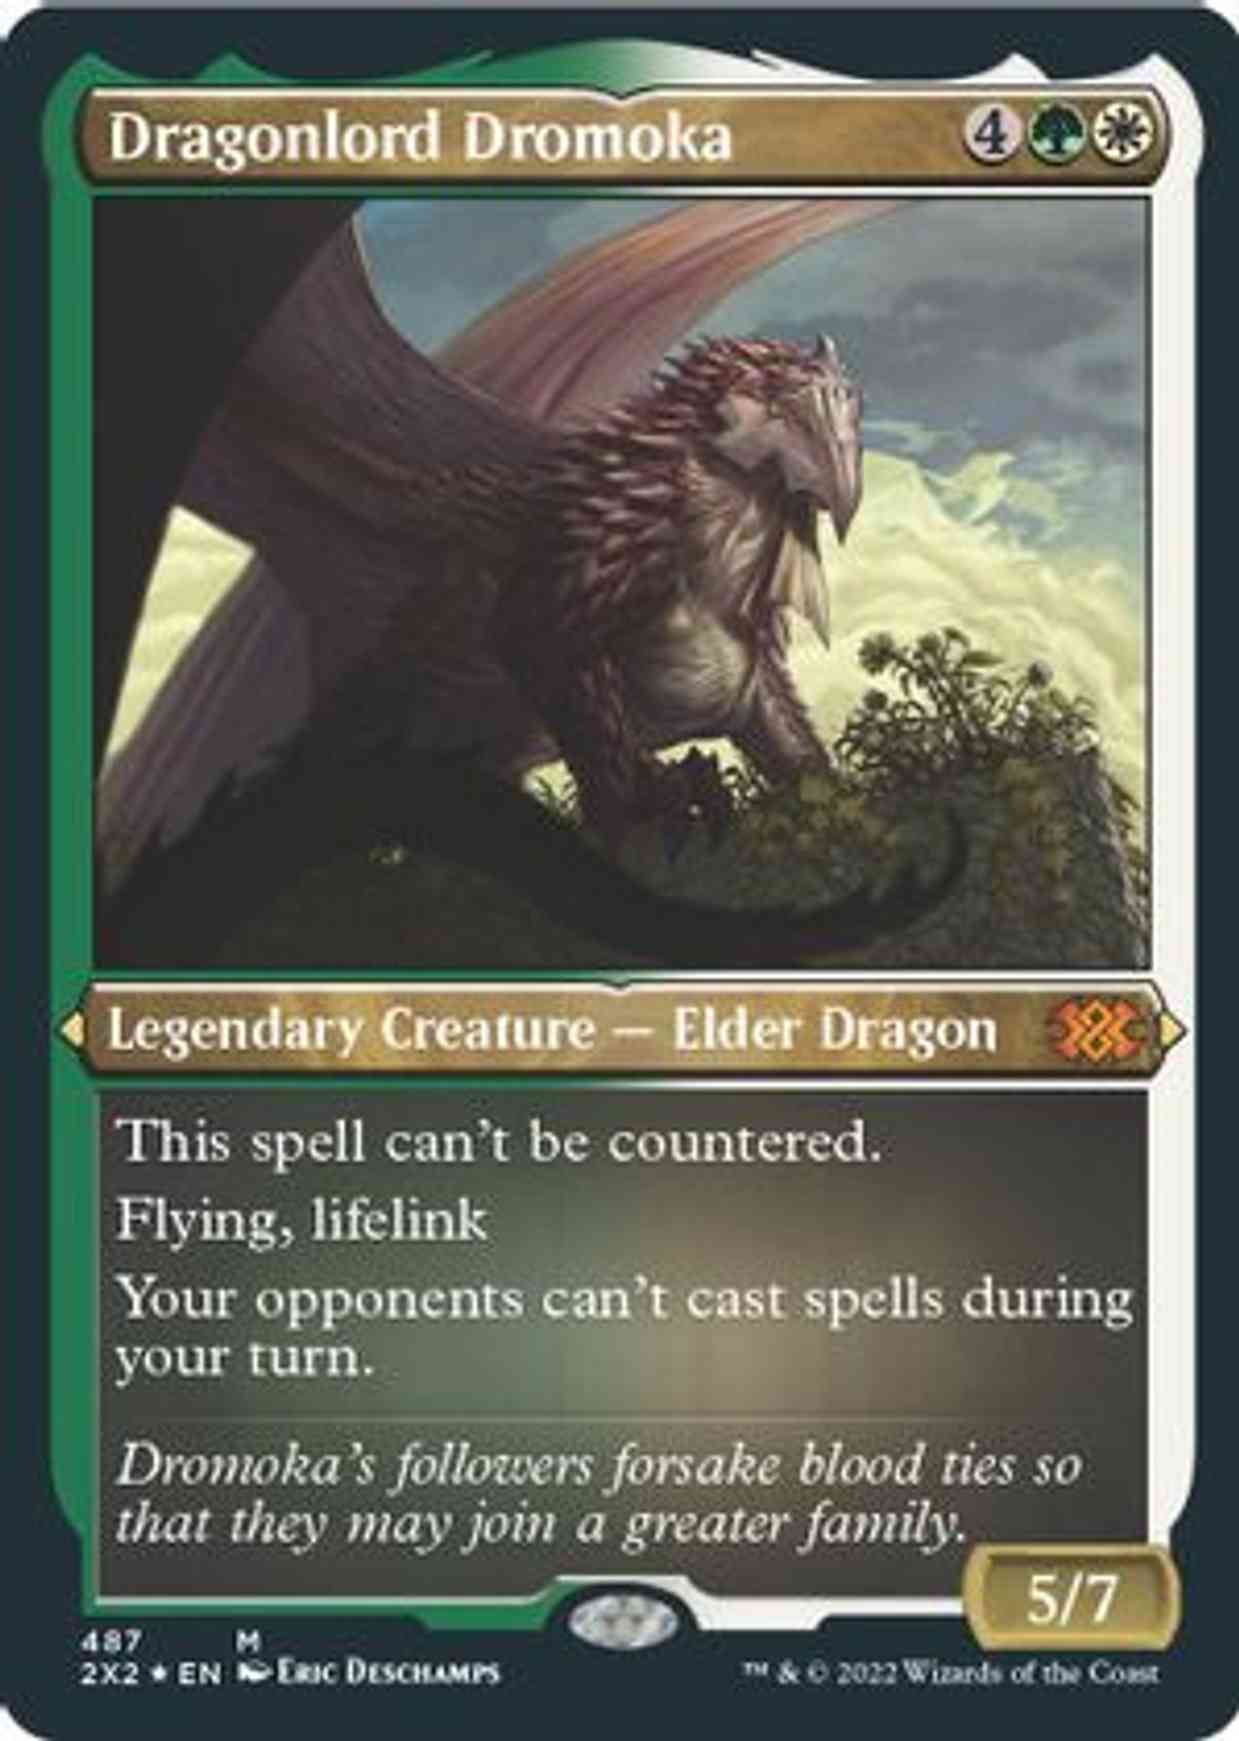 Dragonlord Dromoka (Foil Etched) magic card front